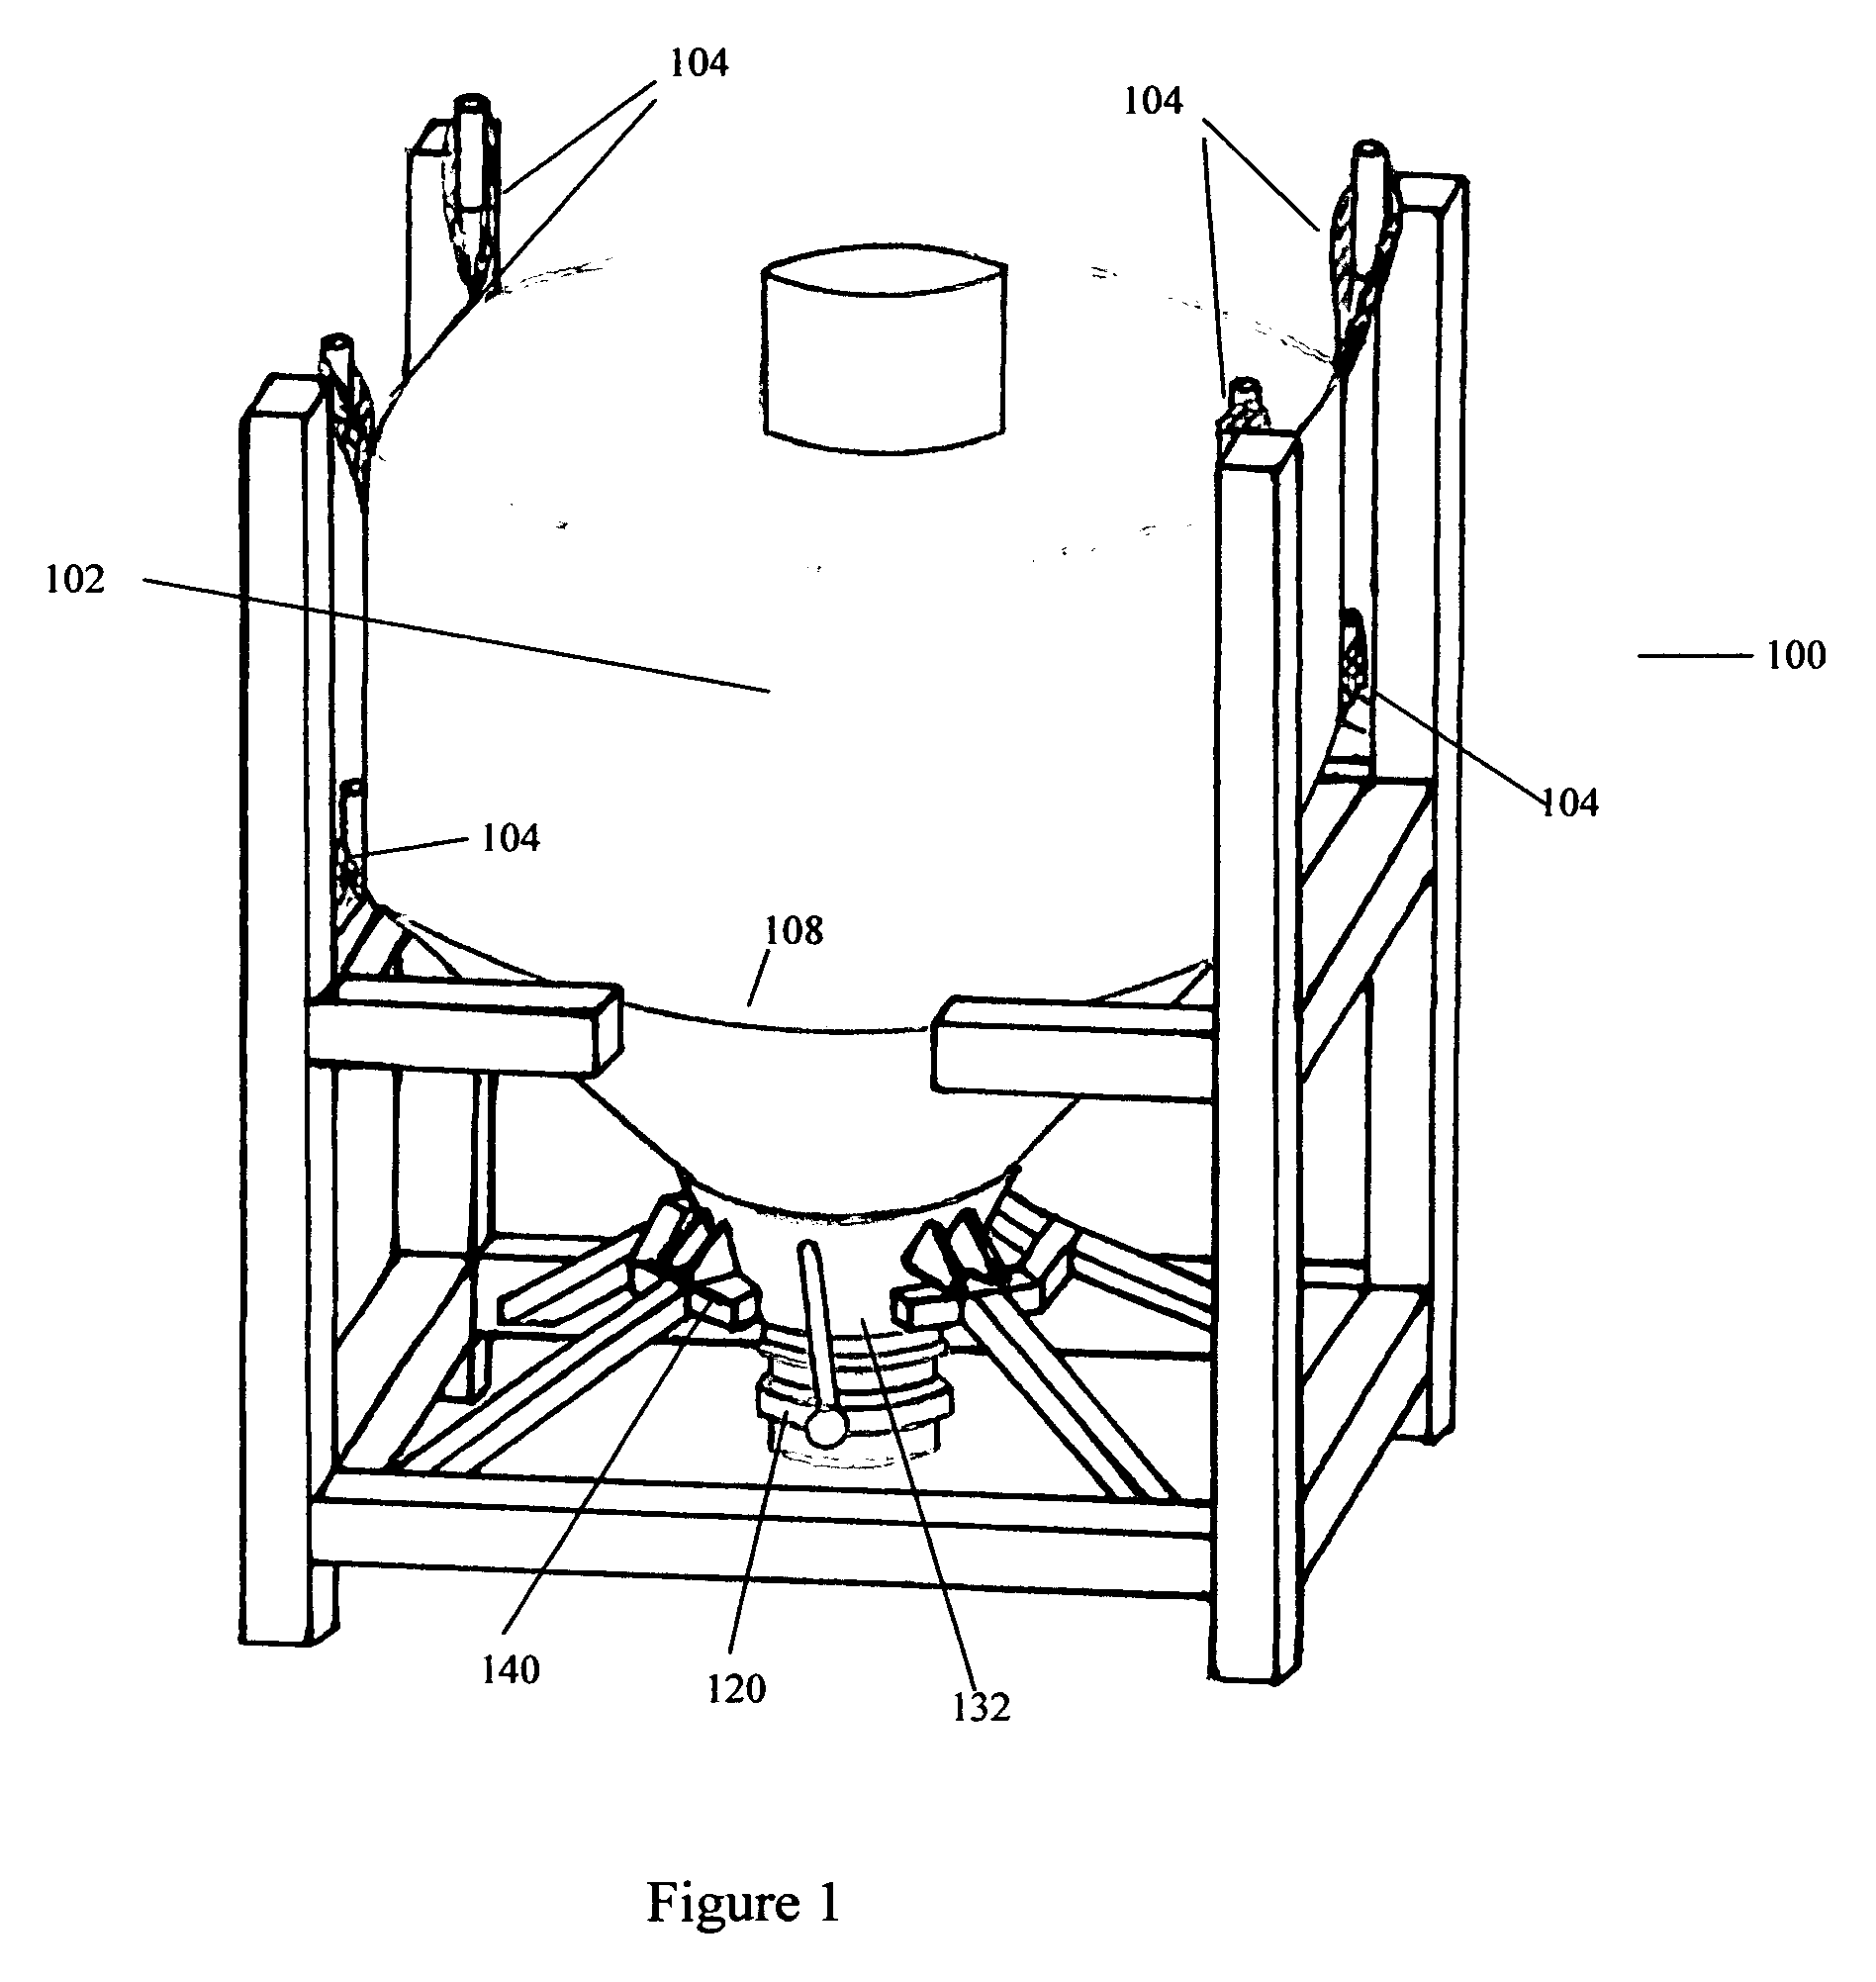 Flexible silo apparatus having a top removable valve or flow control device